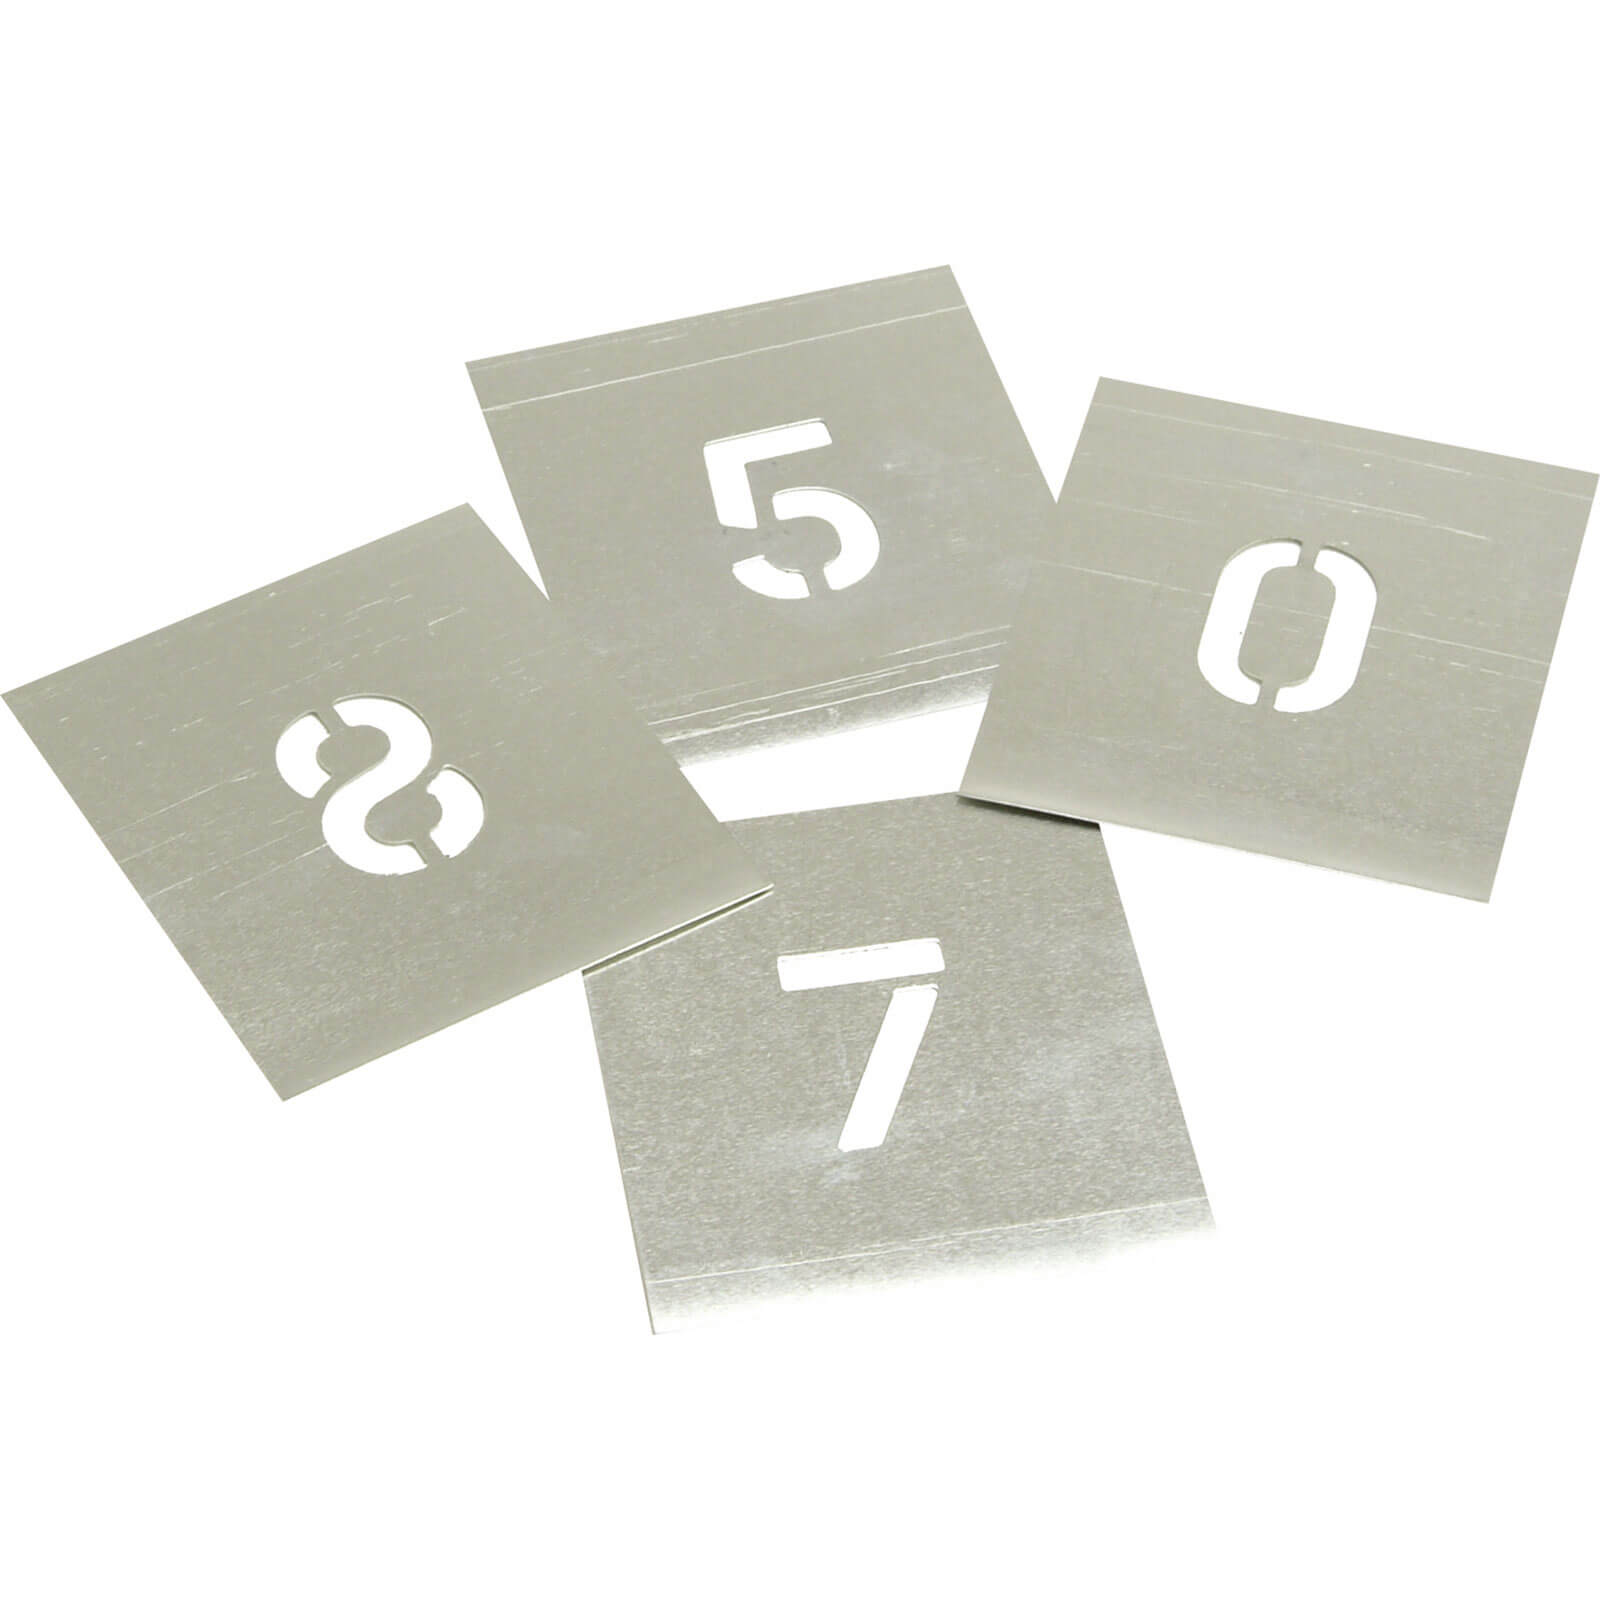 Image of Stencils 8 Piece Zinc Number Stencil Set 1"